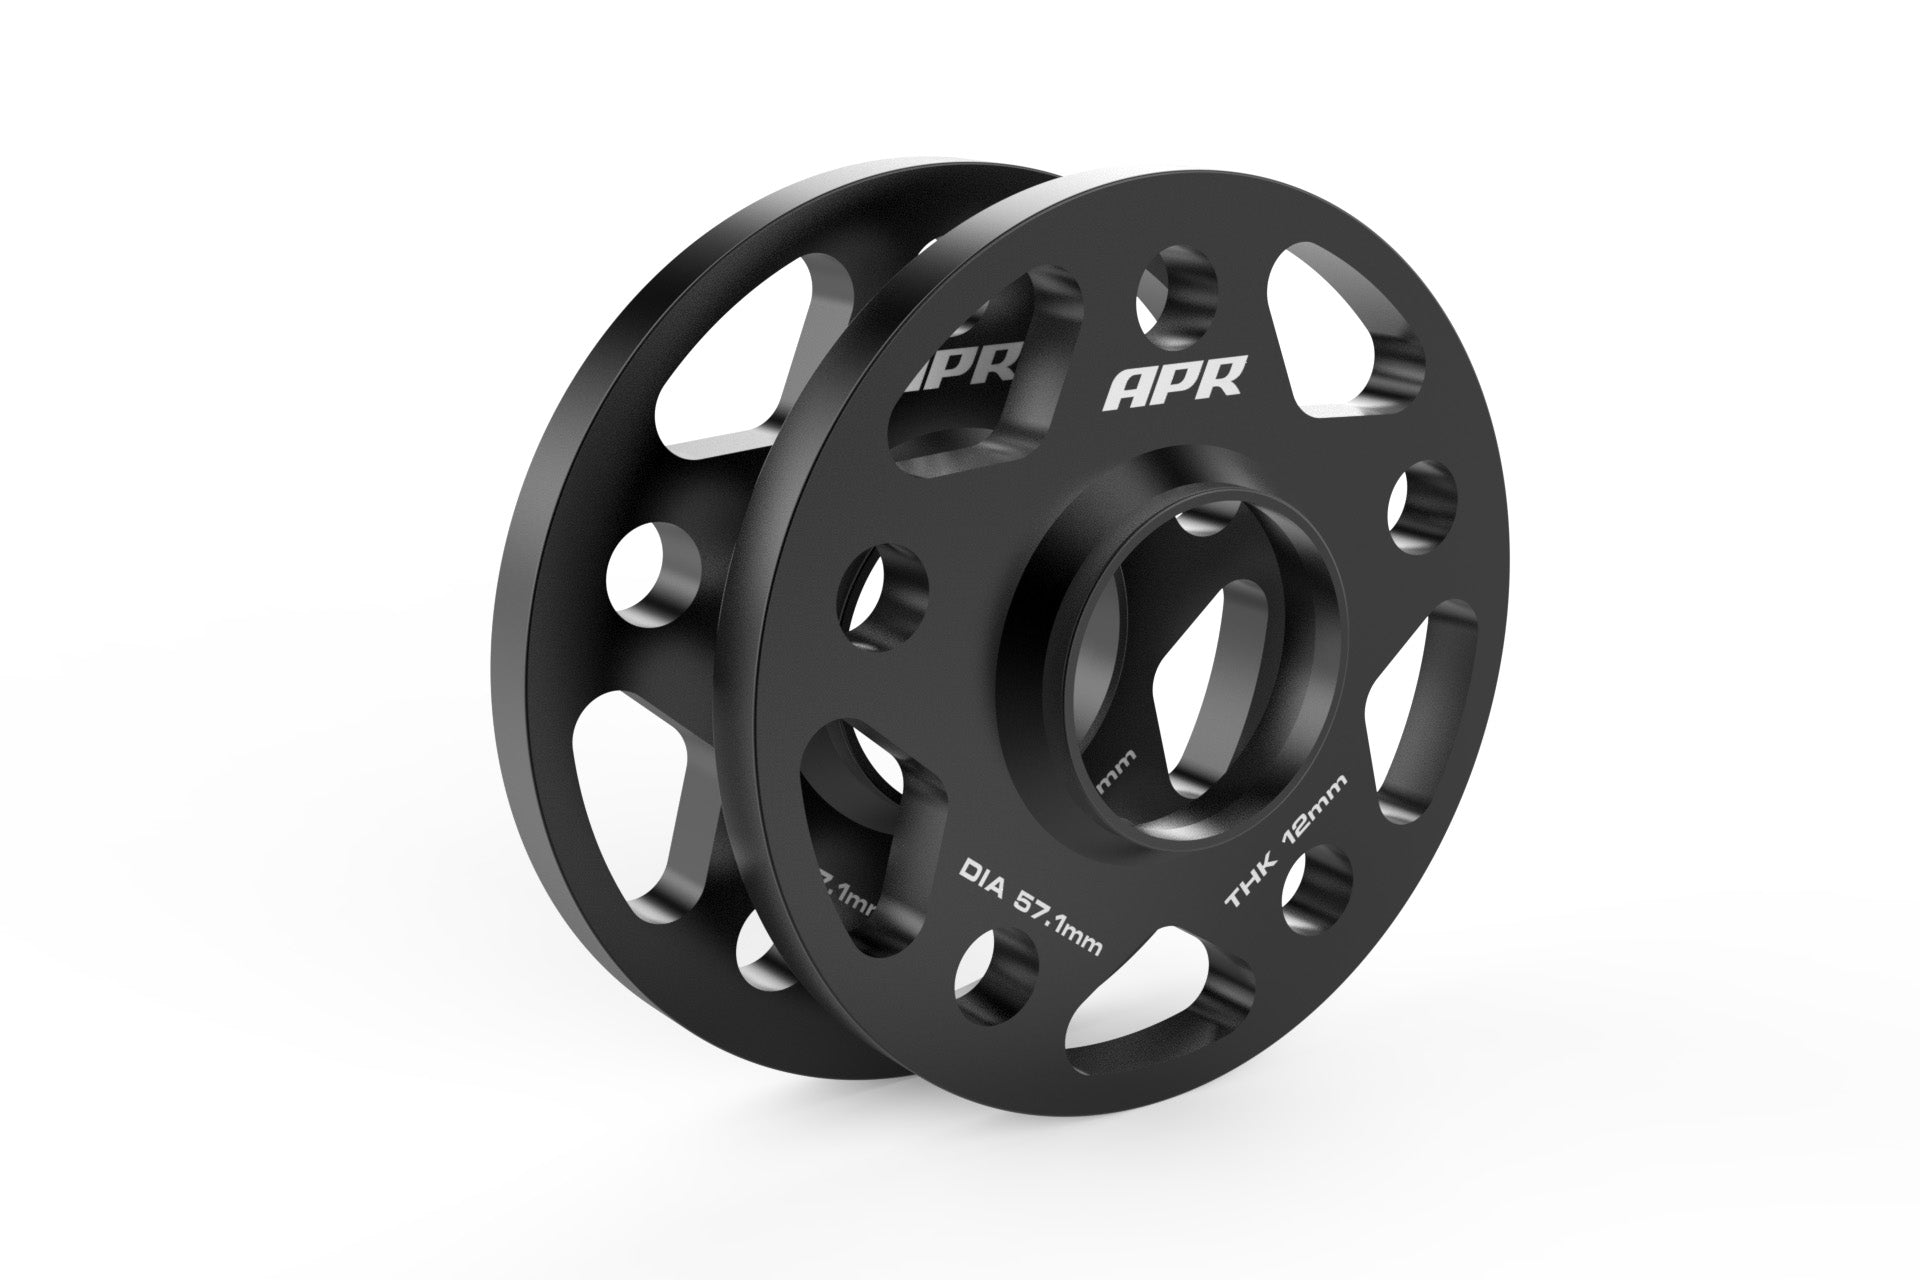 APR Wheel Spacer Kit